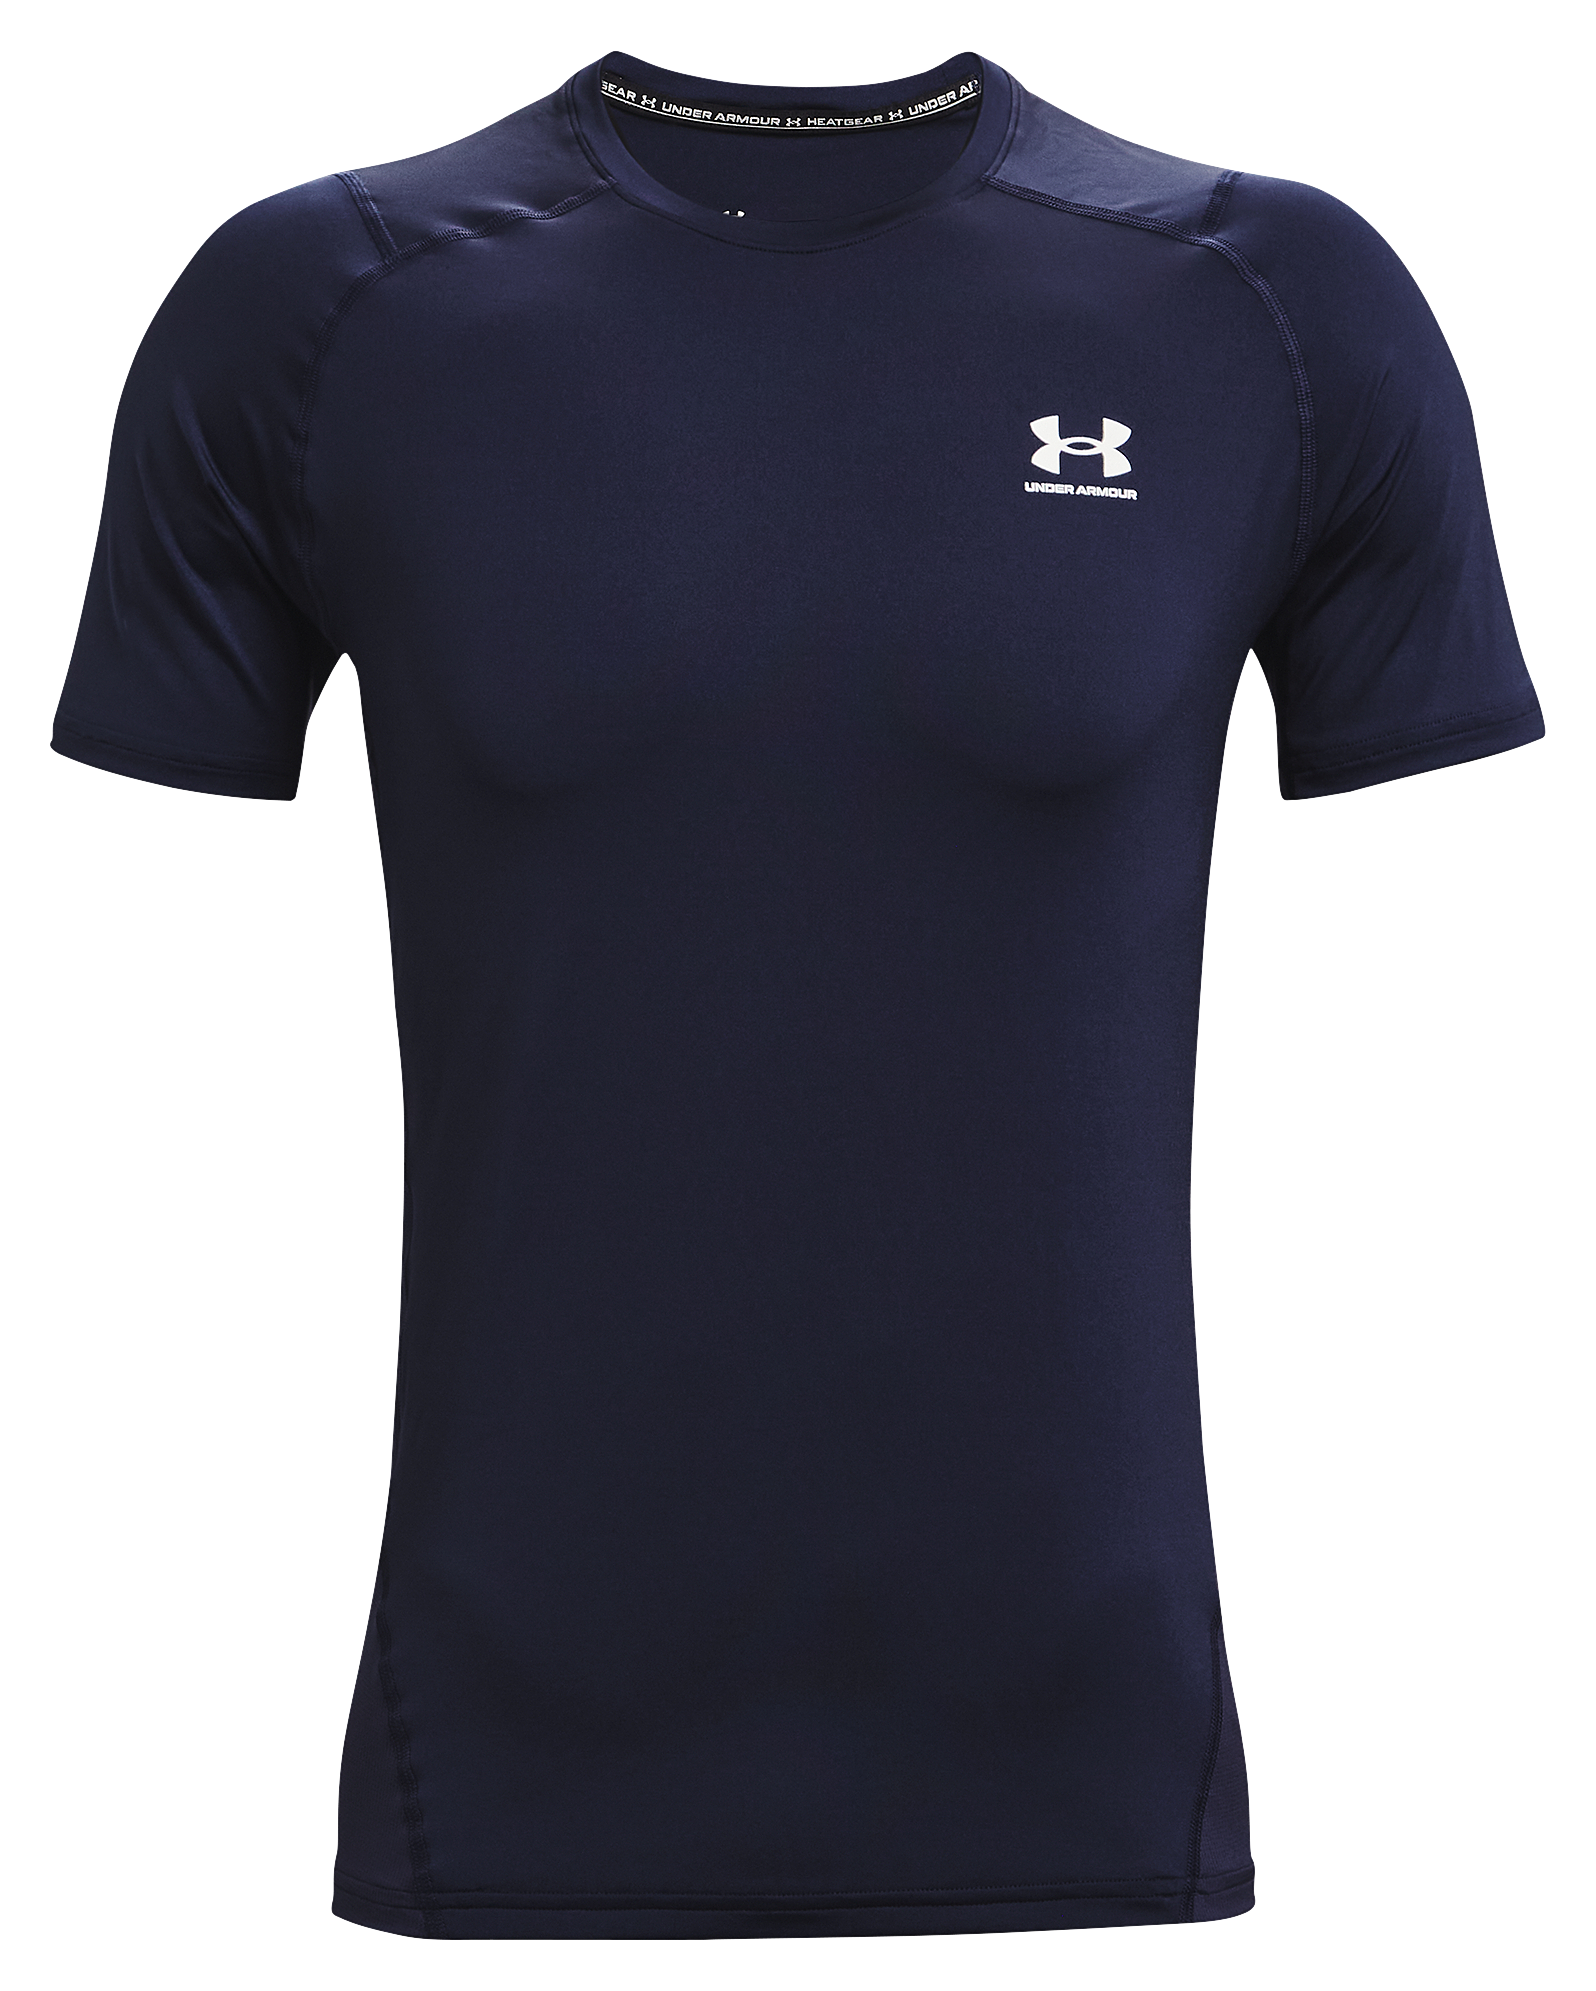 Under Armour HeatGear Fitted Short-Sleeve T-Shirt for Men - Midnight Navy - 2XLT